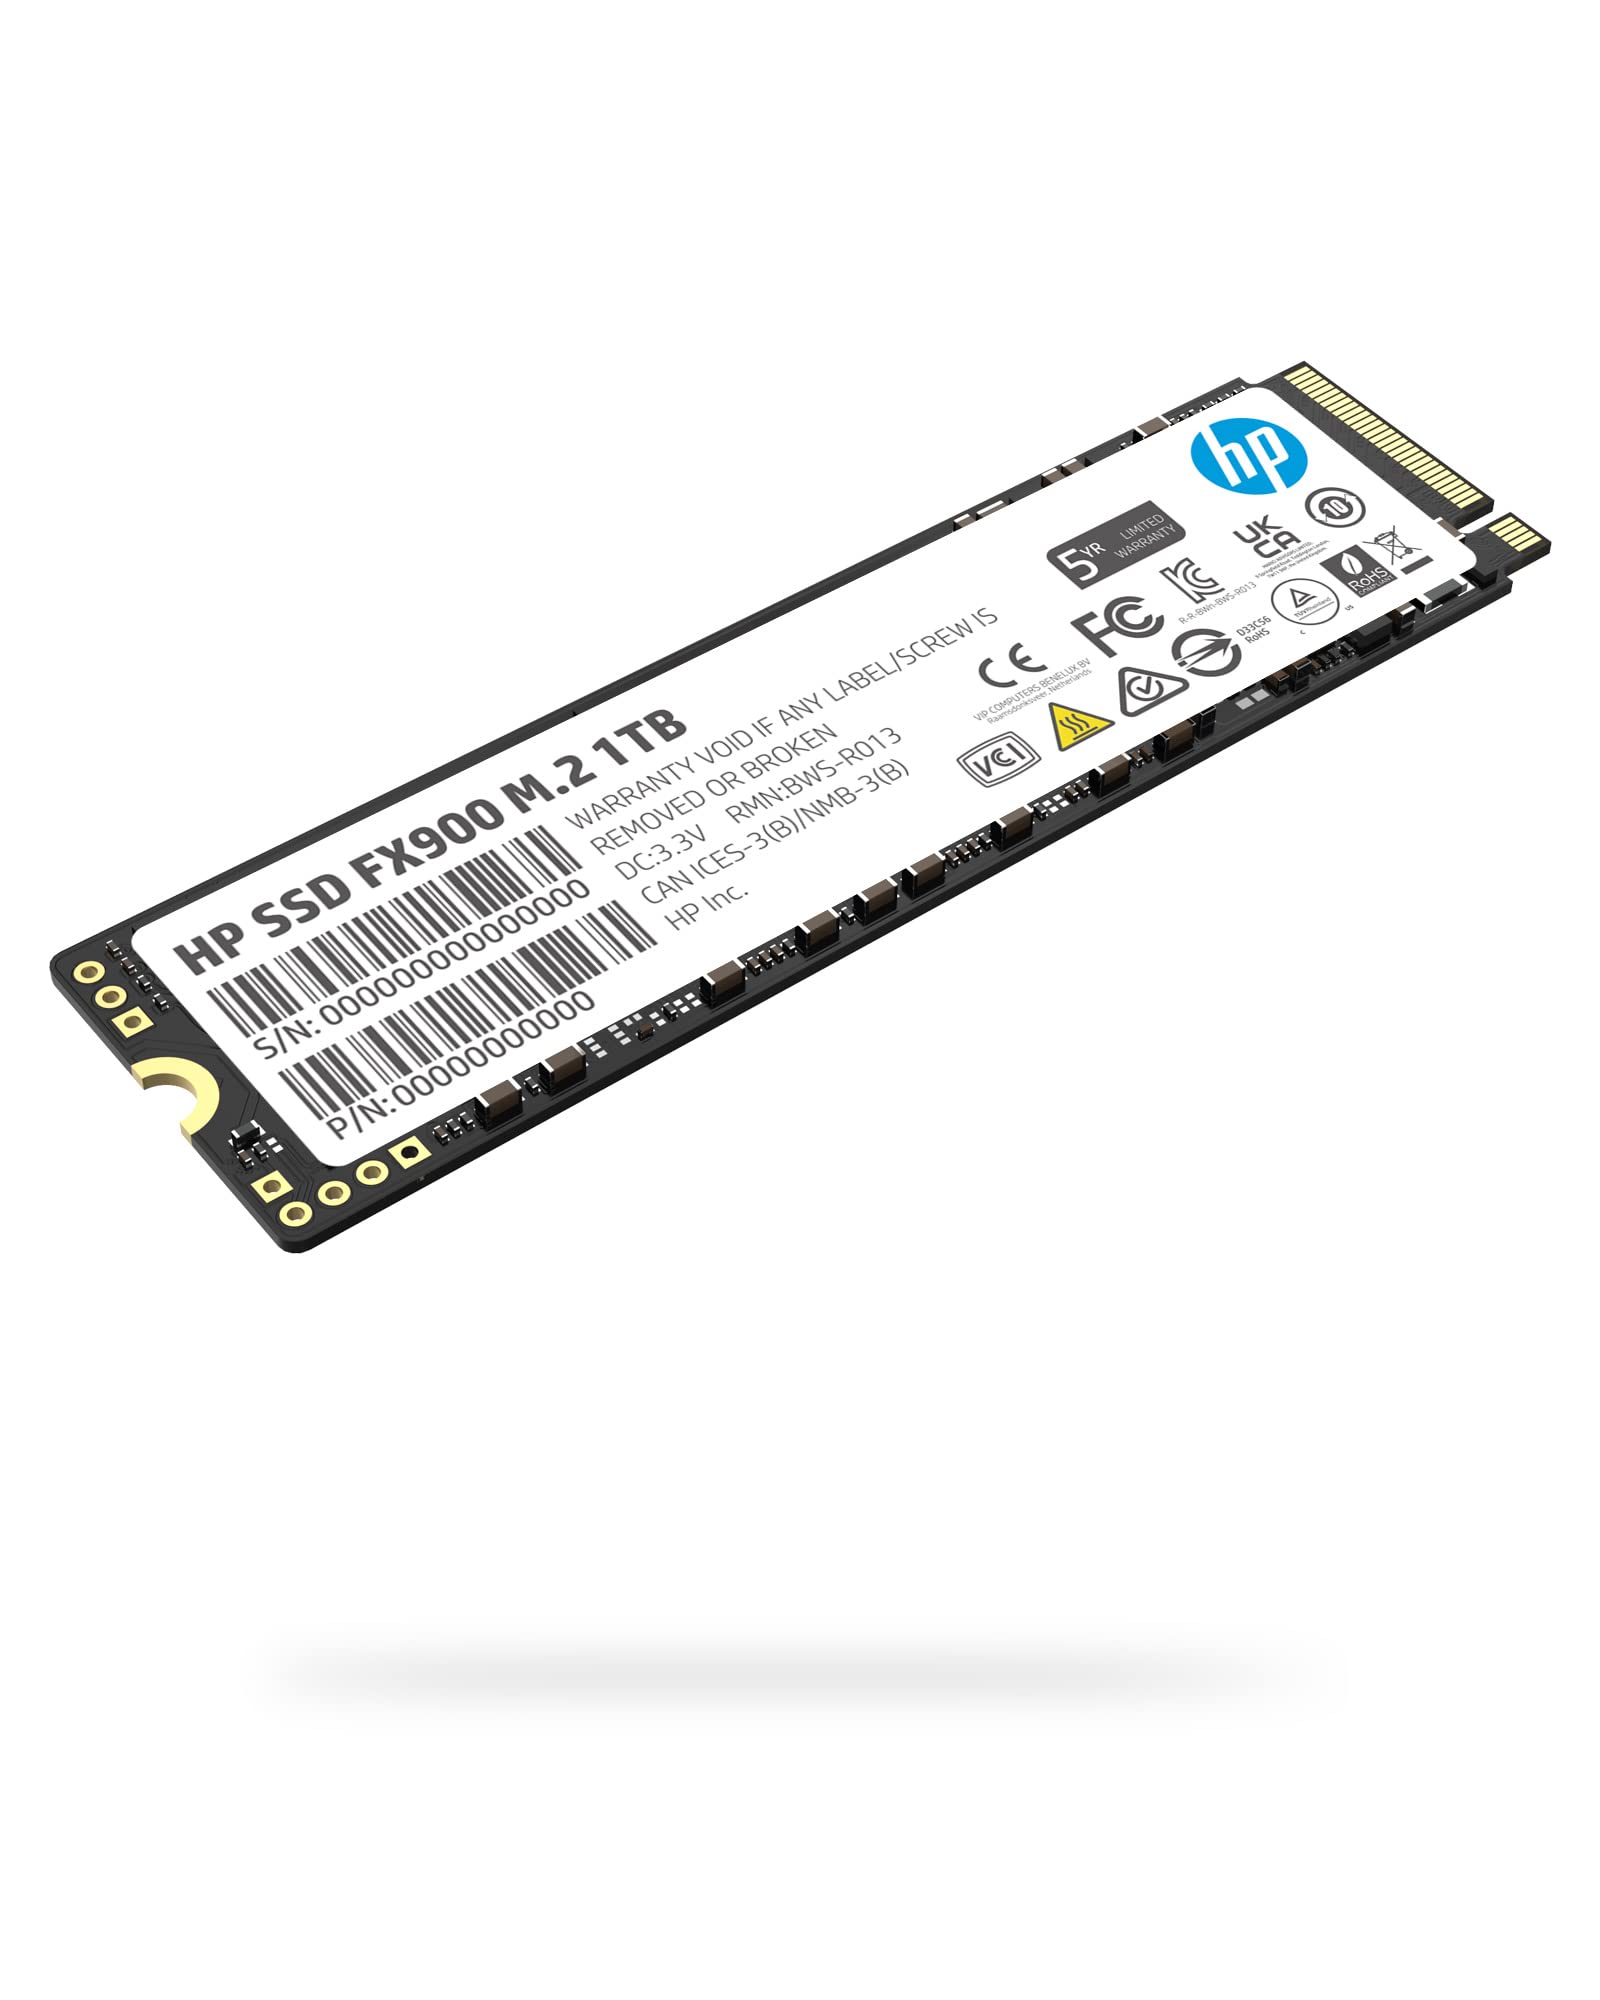 HP FX900 NVMe Gen 4 ゲーミングPC SSD - PCIe 4.0 16 Gbs M.2 2280 3D TLC NAND 内蔵 ソリッドステートハードド